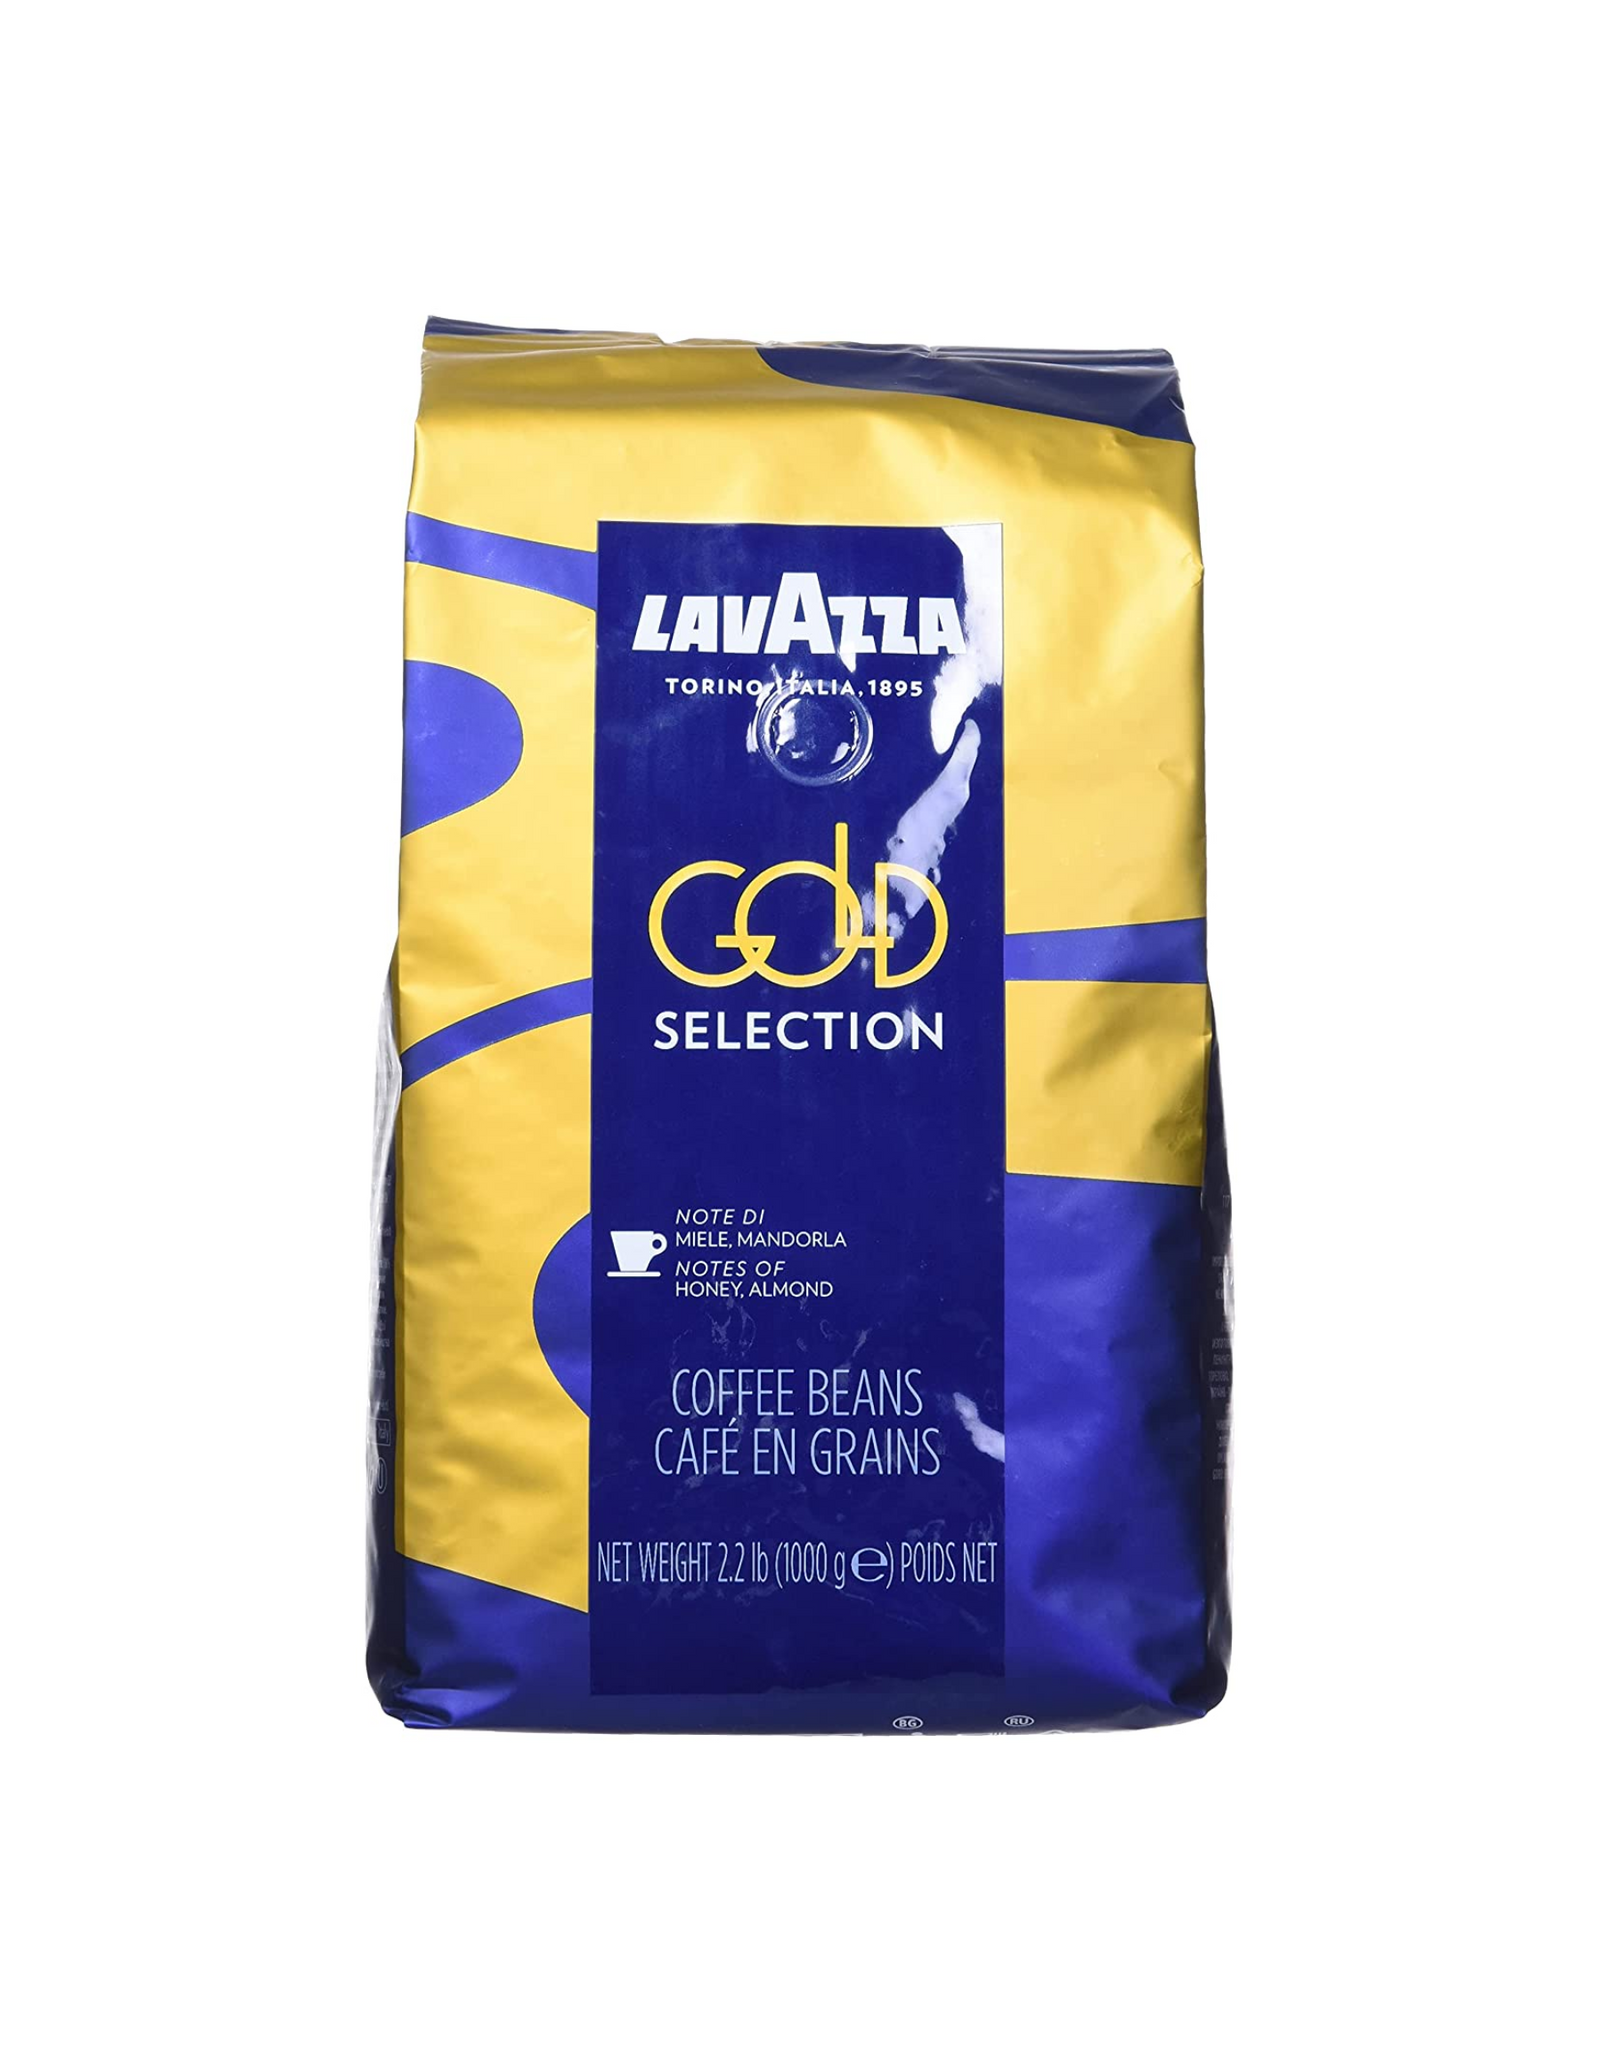 Lavazza Gold Selection Whole Bean Coffee Blend, Medium Espresso Roast, 35.2 oz (2.2 lb)